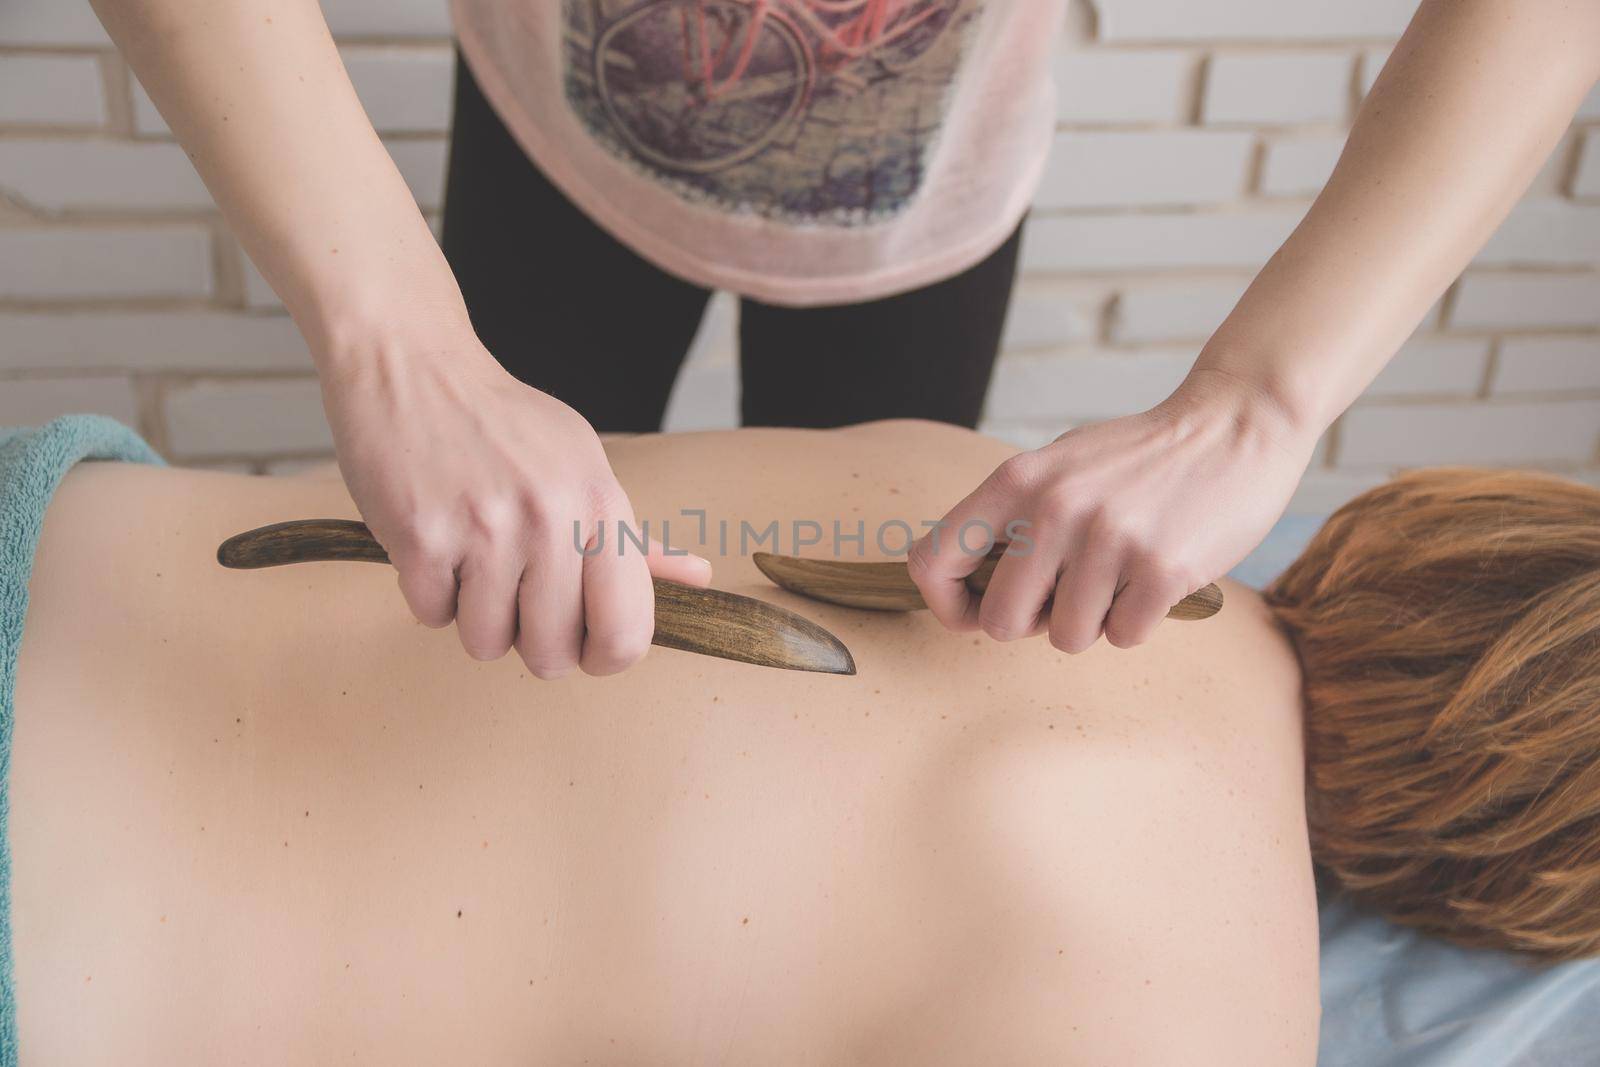 therapeutic back massage in the spa salon makes the girl a massage by ozornina